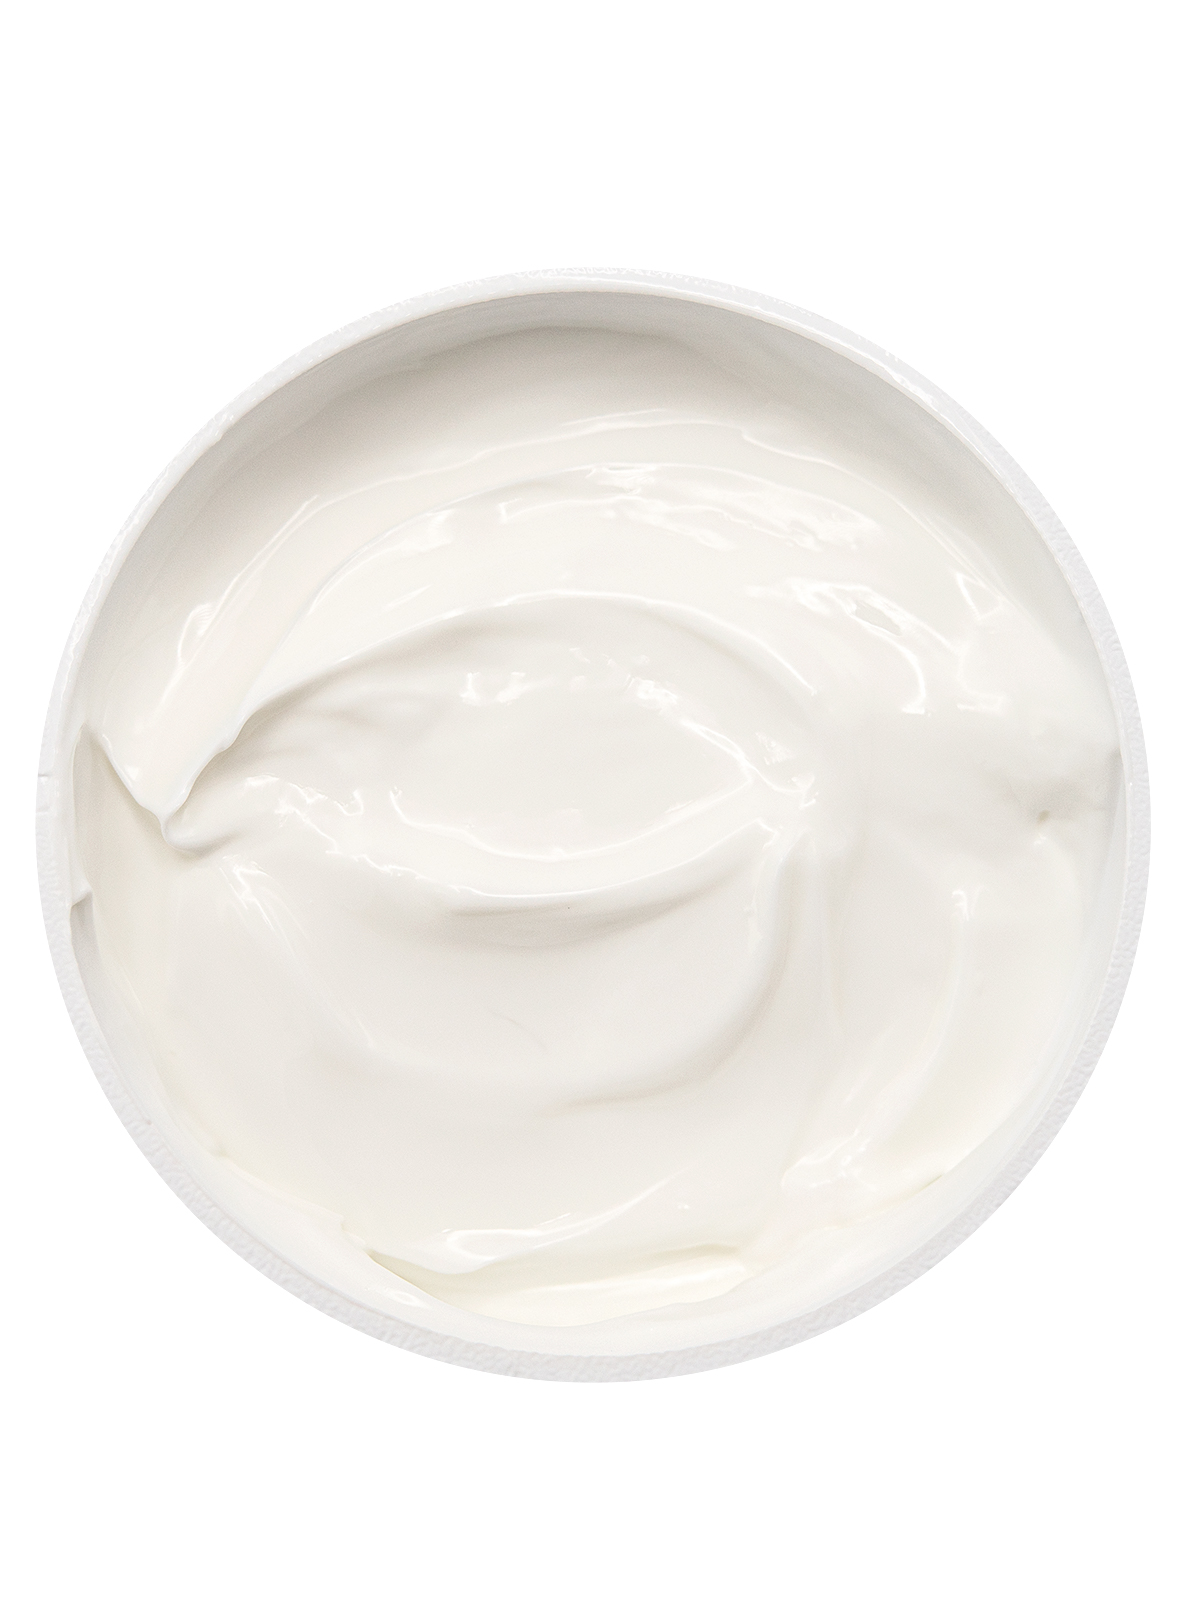 ARAVIA Professional Крем для массажа Modelage Active Cream, 300 мл.